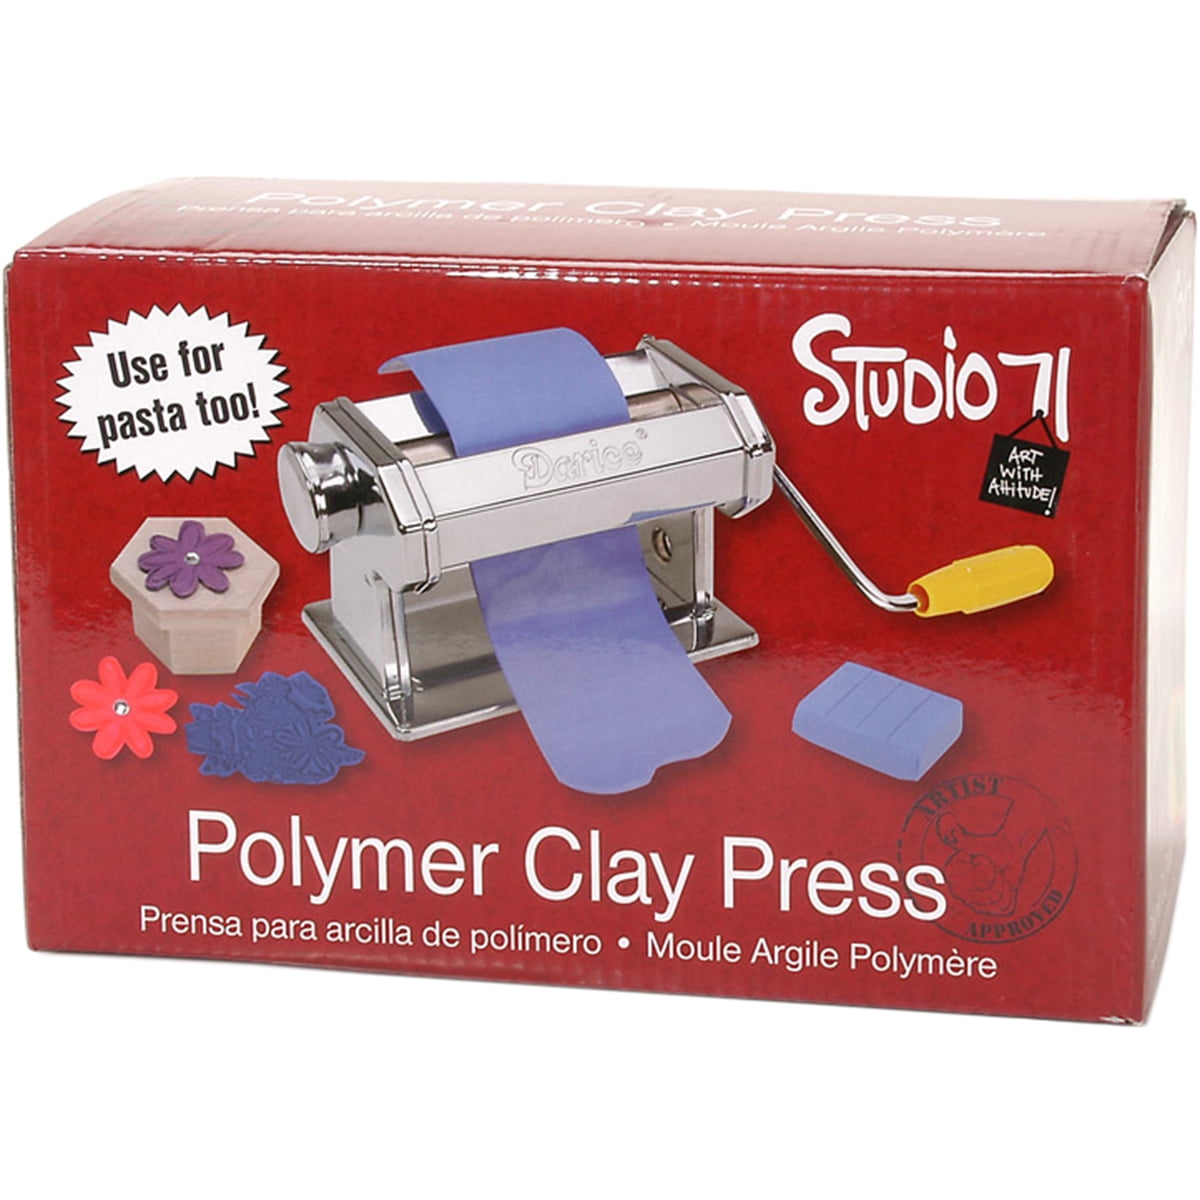  Yofuly Polymer Clay Press Machine, Polymer Clay